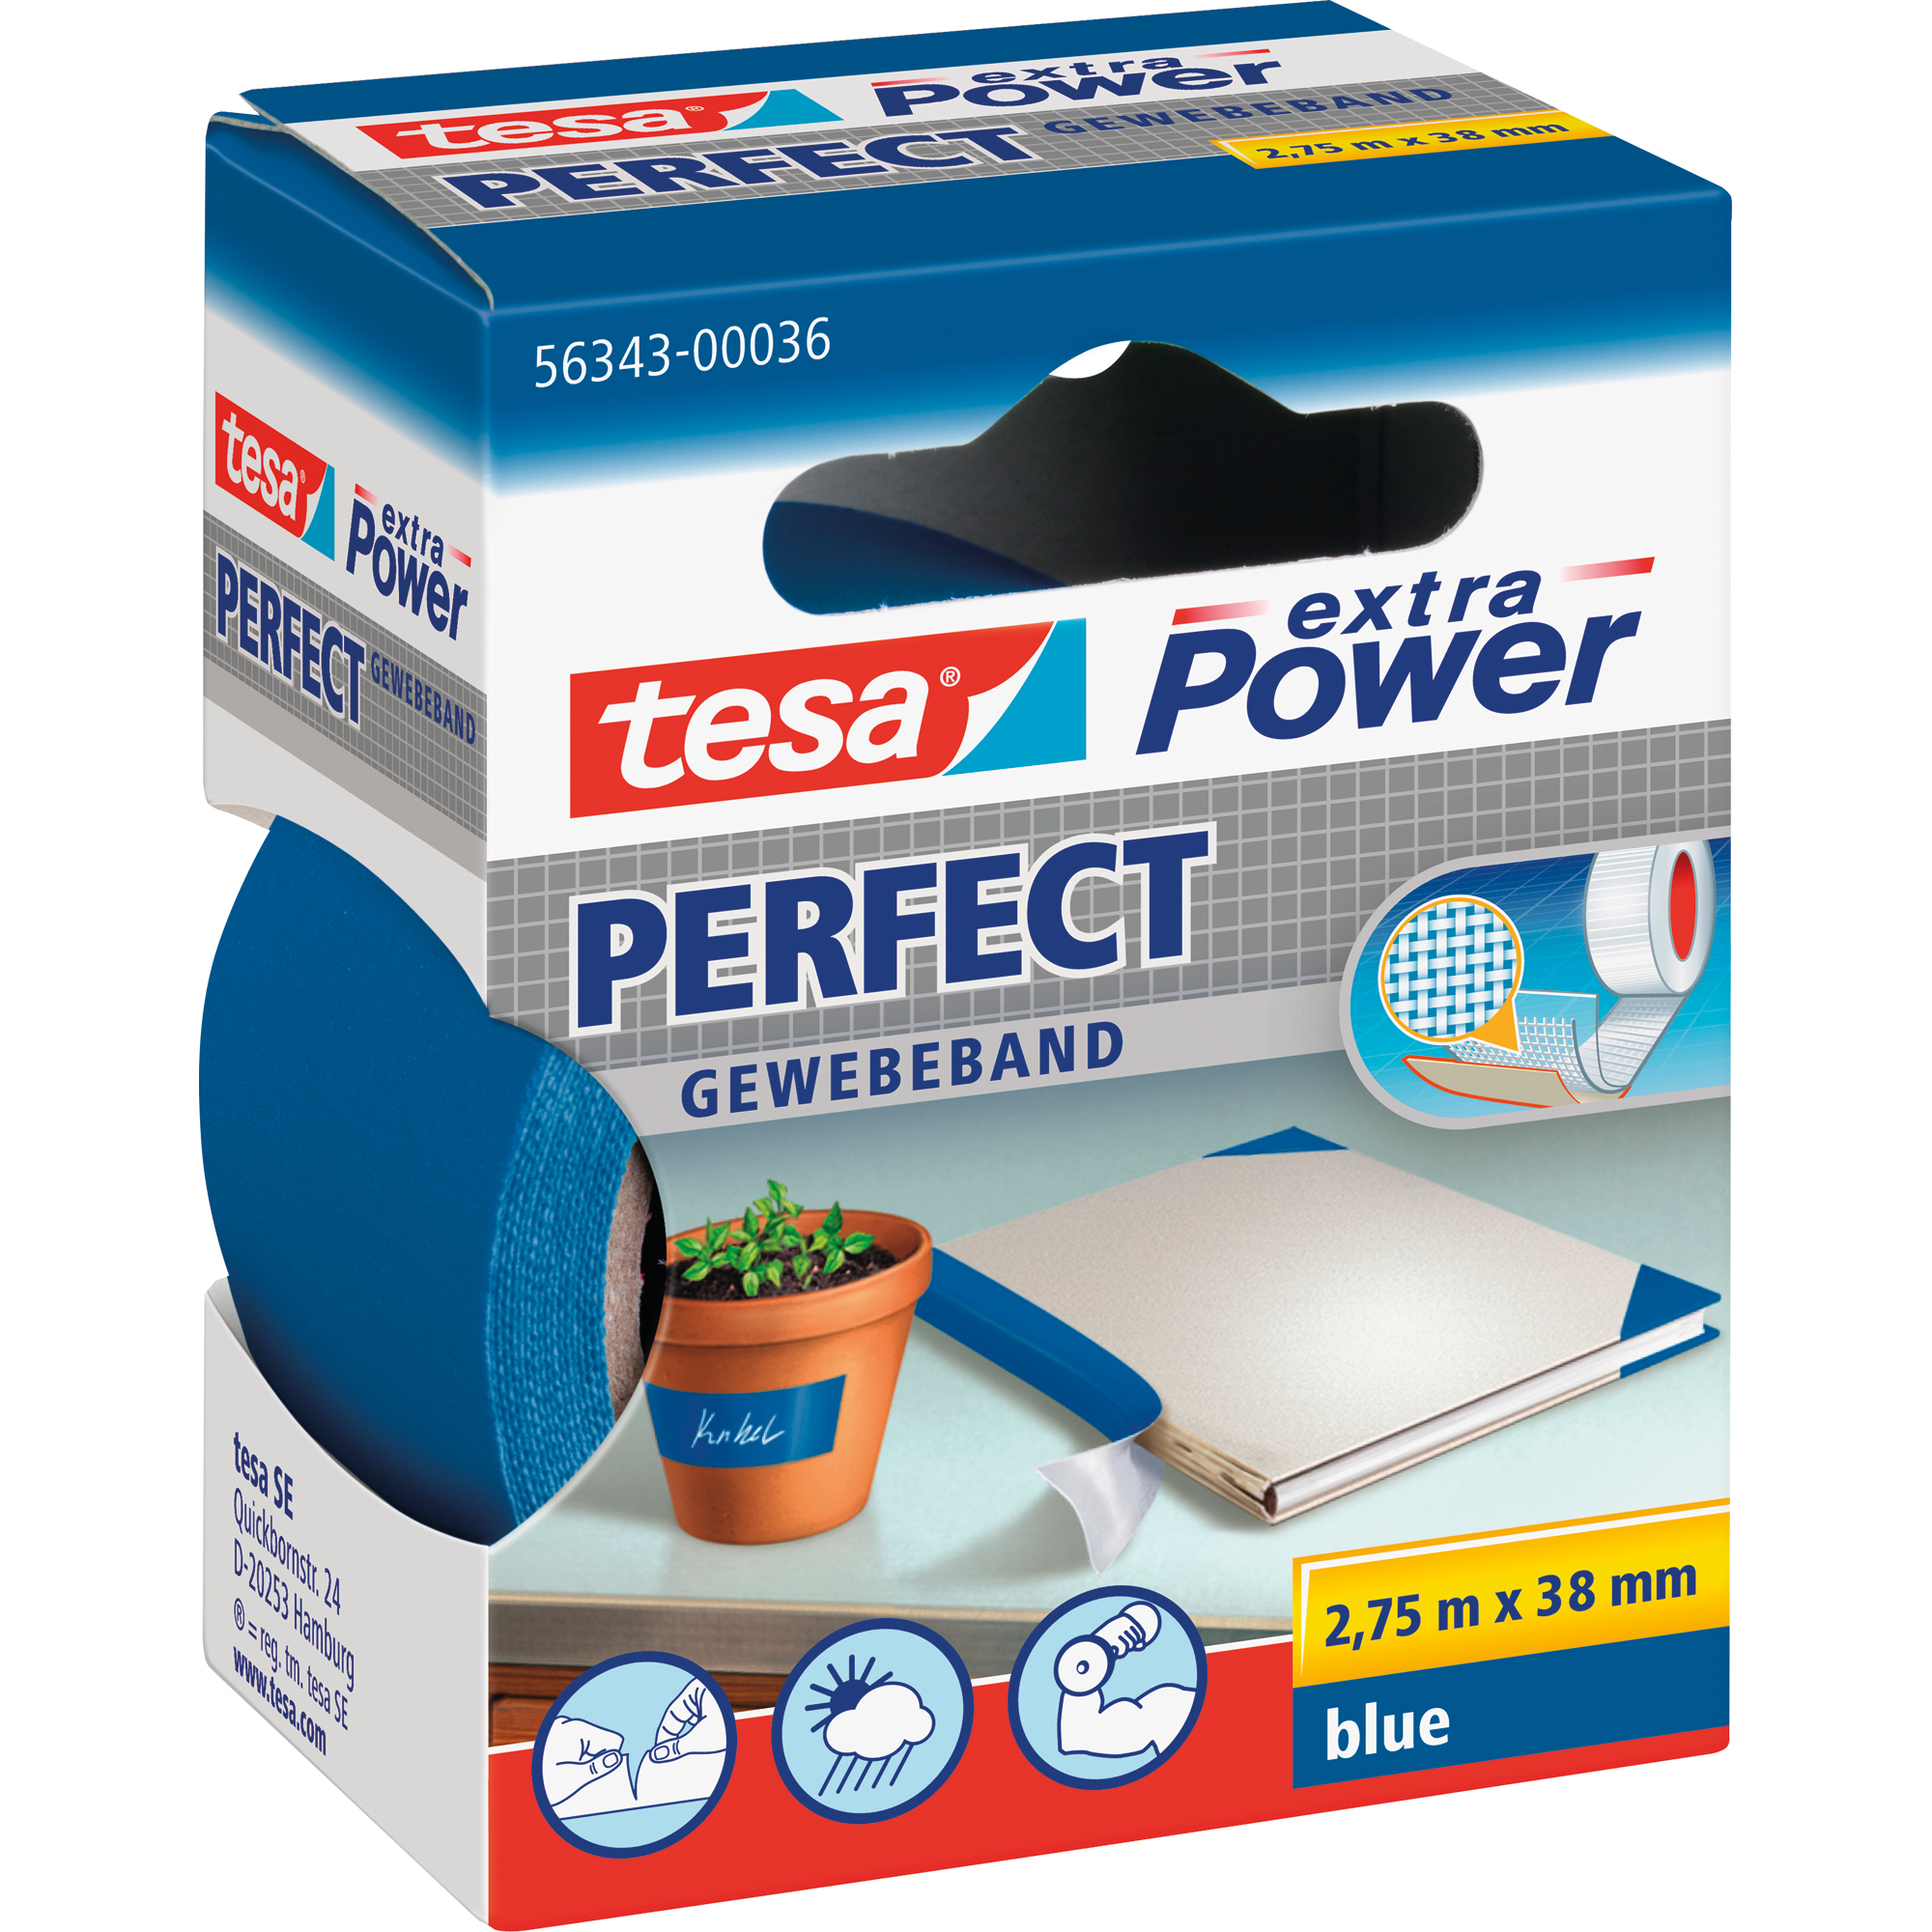 tesa® Gewebeband extra Power® Perfect 38 mm blau